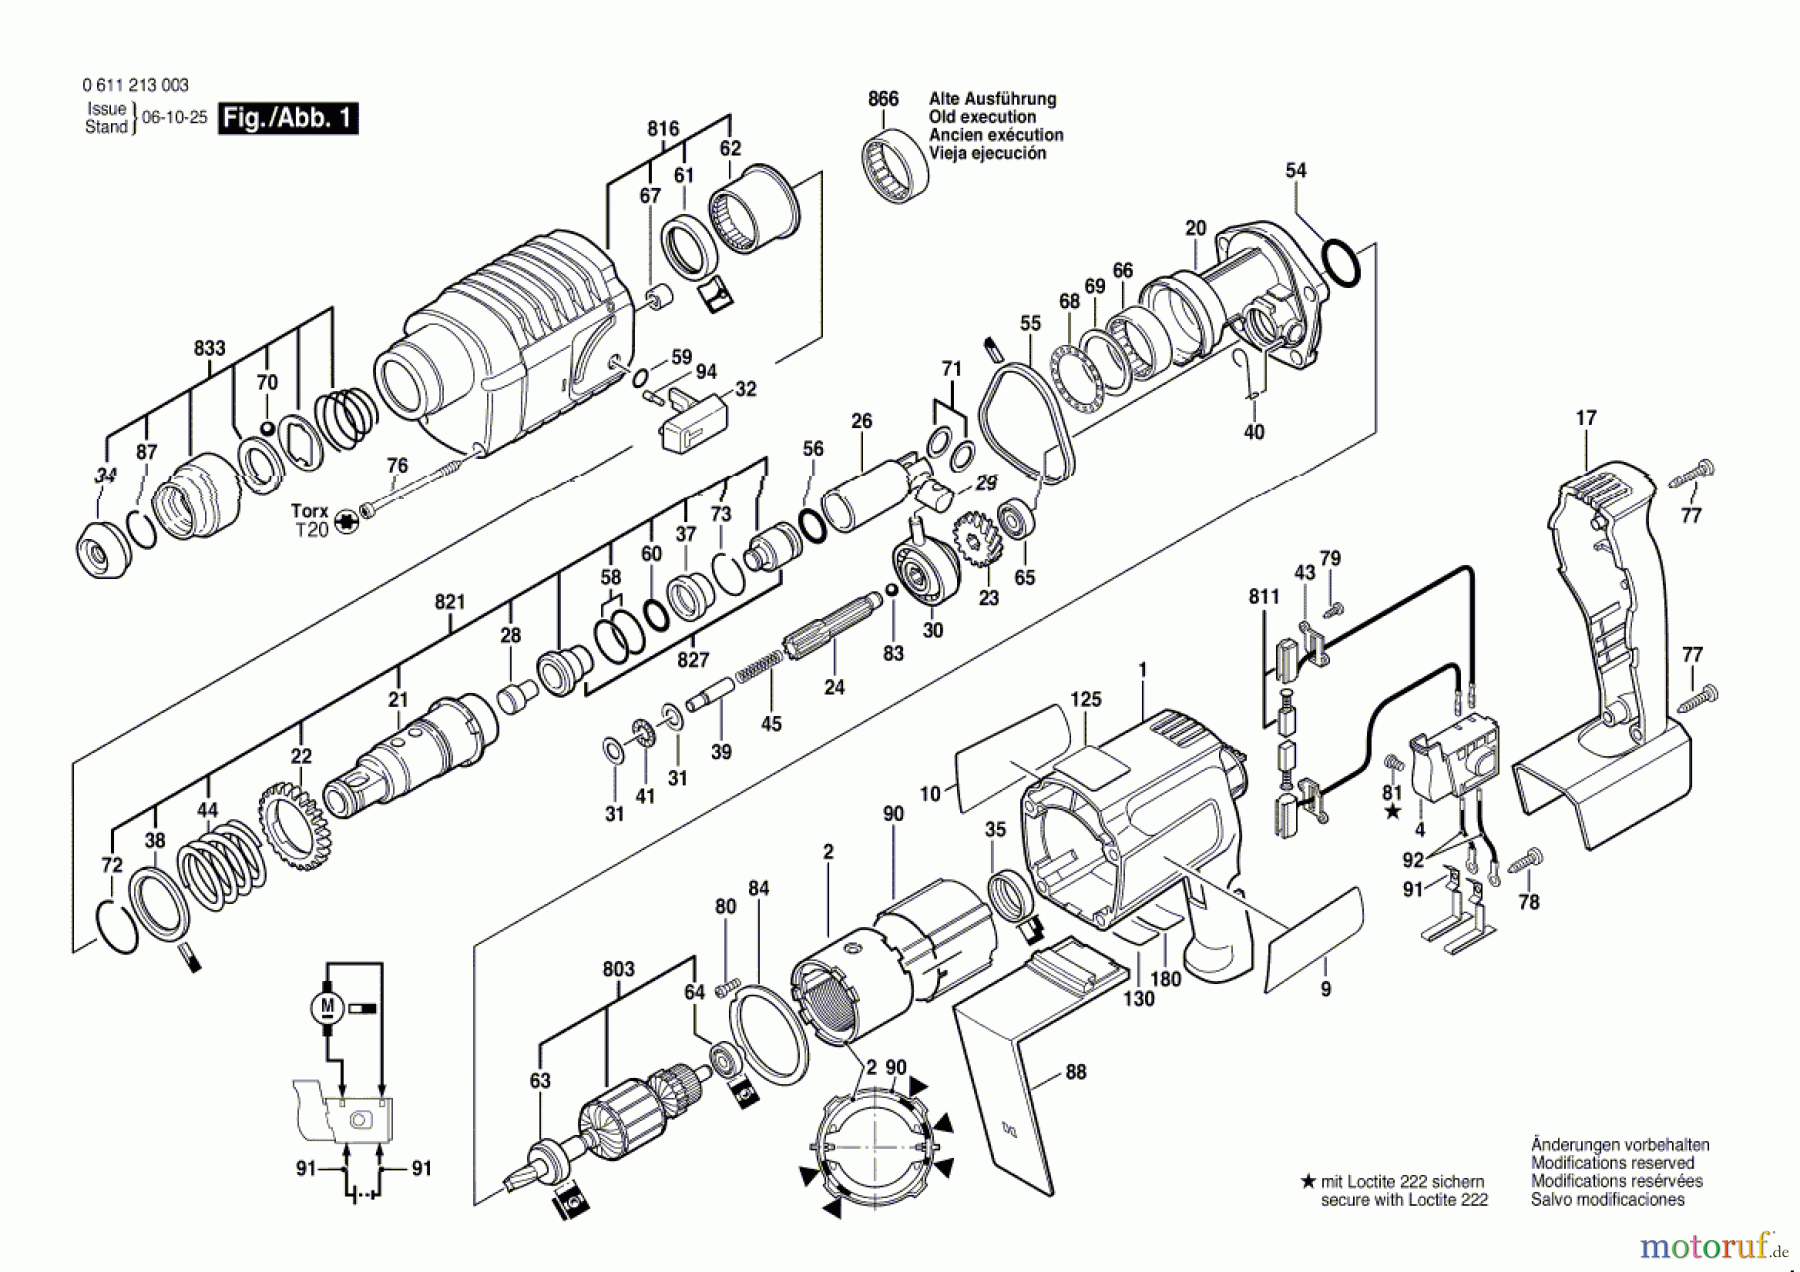  Bosch Akku Werkzeug Gw-Akku-Bohrhammer GBH 24 V Seite 1